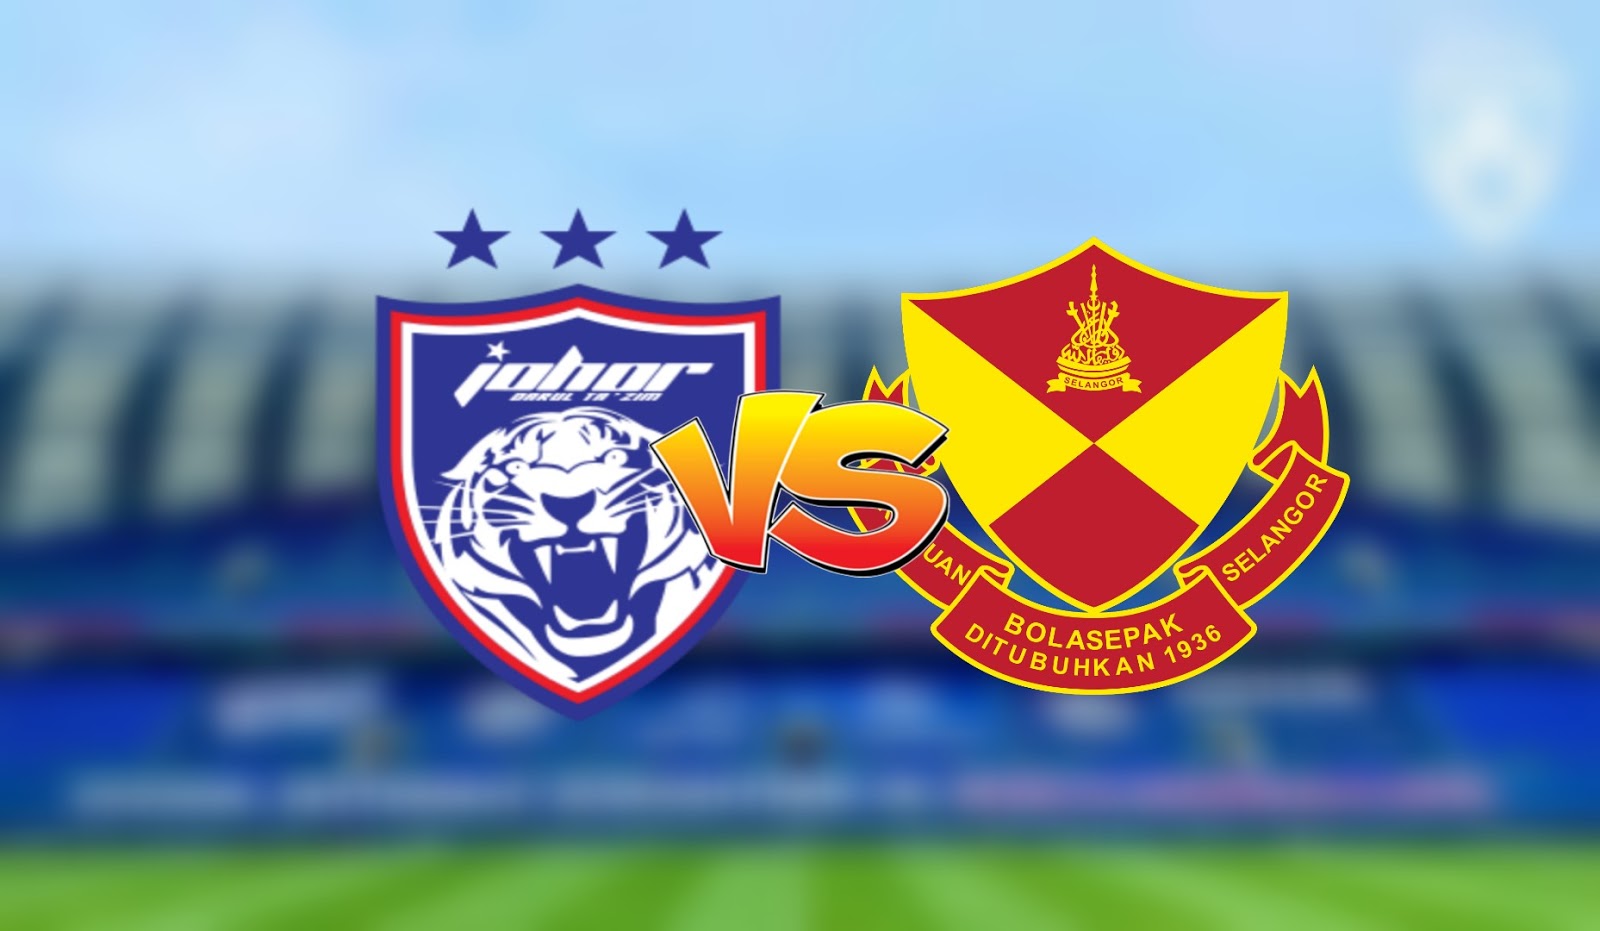 Live Streaming JDT vs Selangor Liga Super 19.9.2020 - MY INFO SUKAN